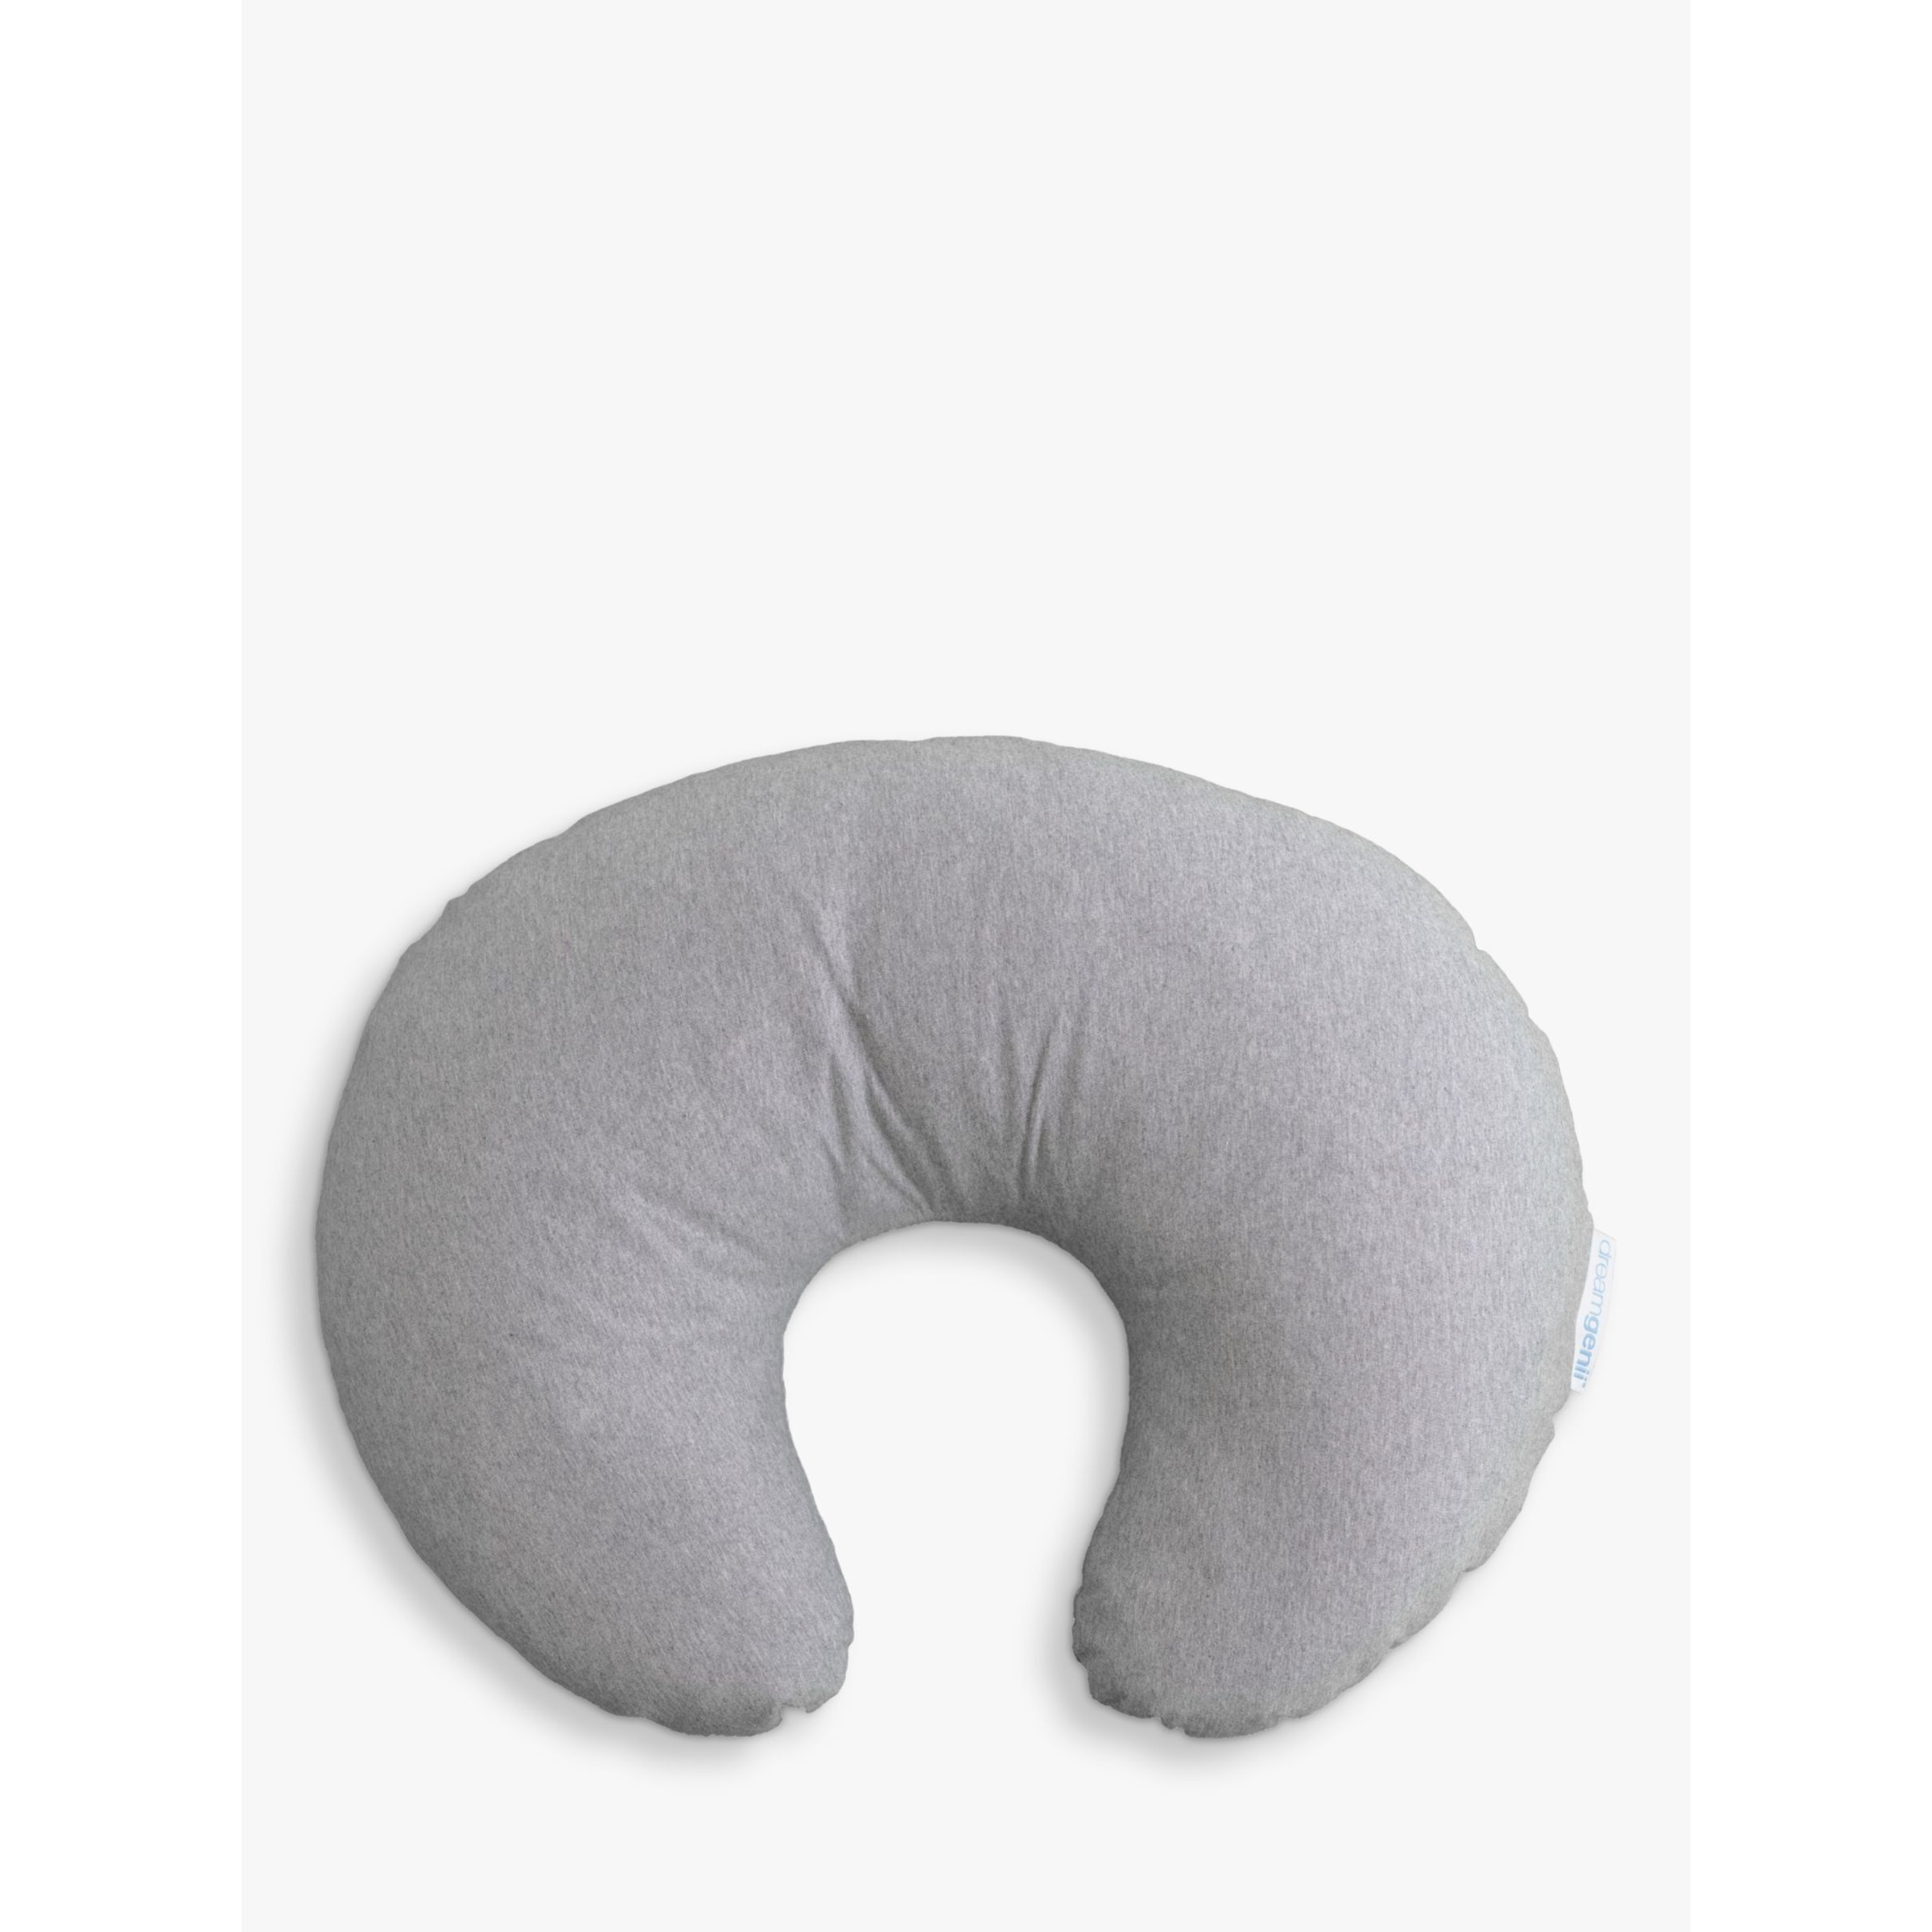 Dreamgenii Nursing Support Pillow, Grey Marl - image 1